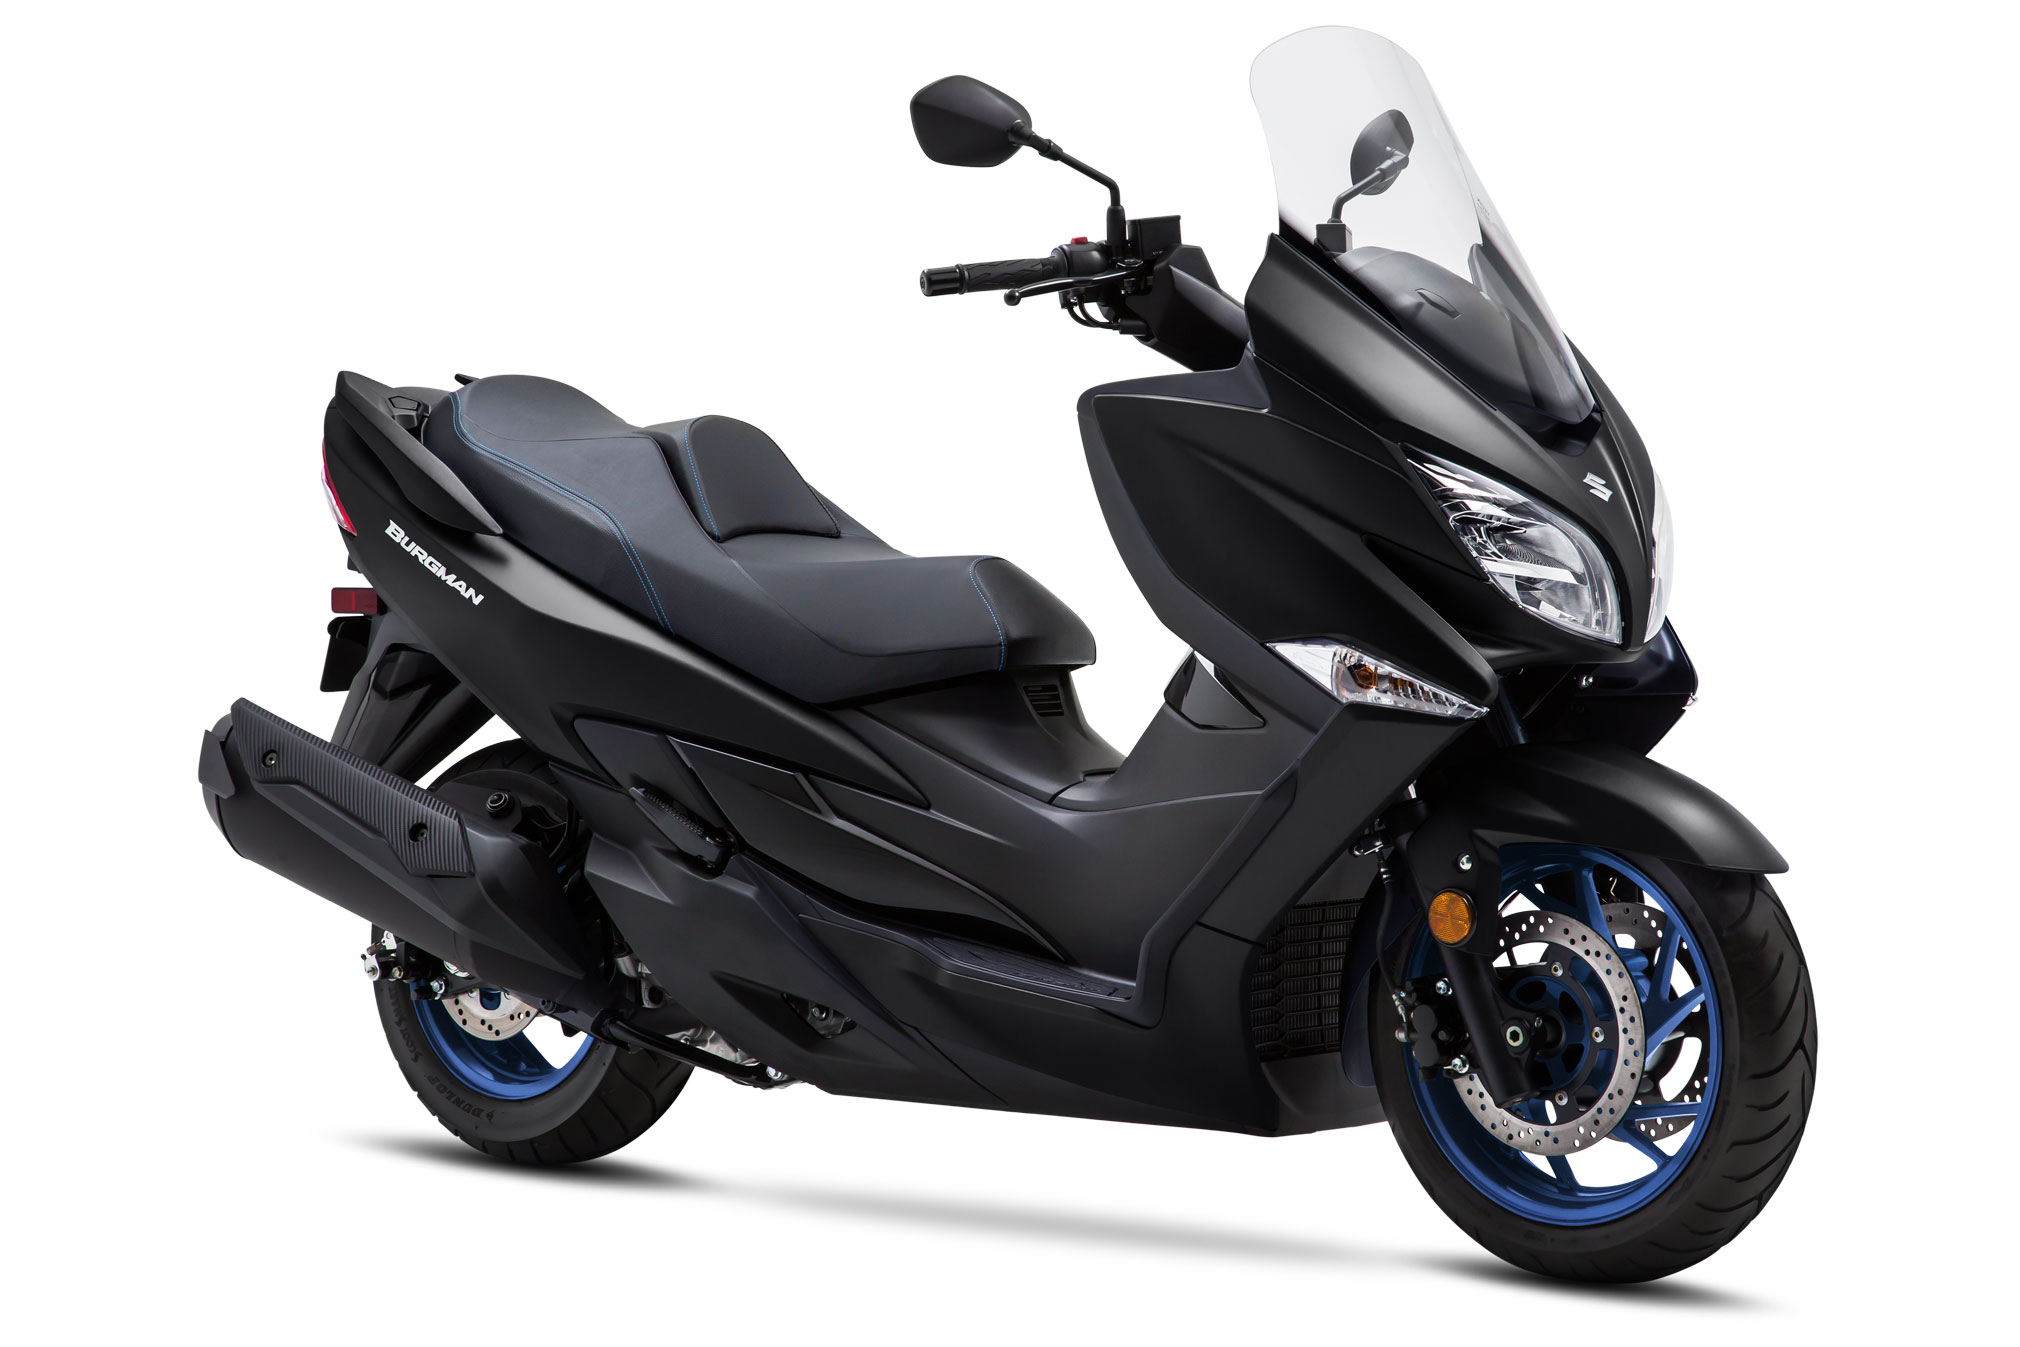 2020 Suzuki Burgman 400 ABS Guide • Total Motorcycle